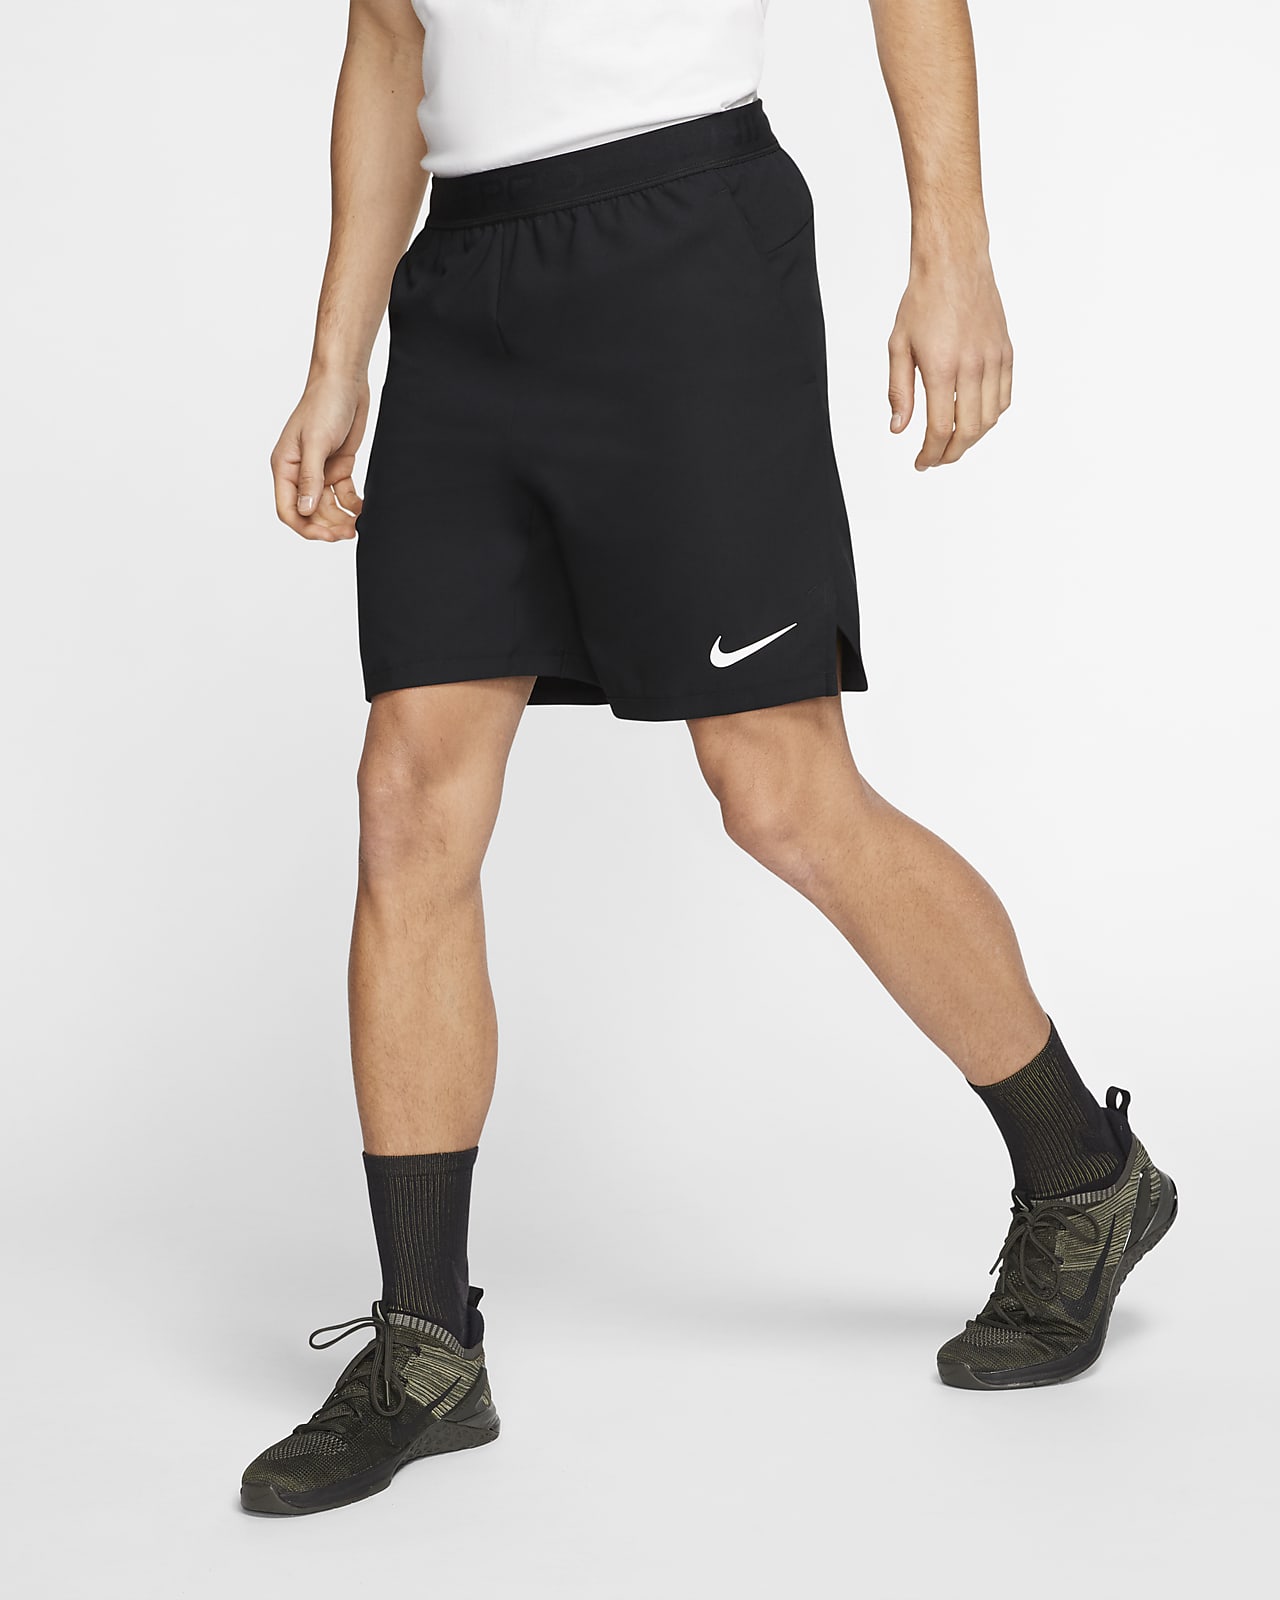 Мужские шорты Nike Pro Flex Vent Max